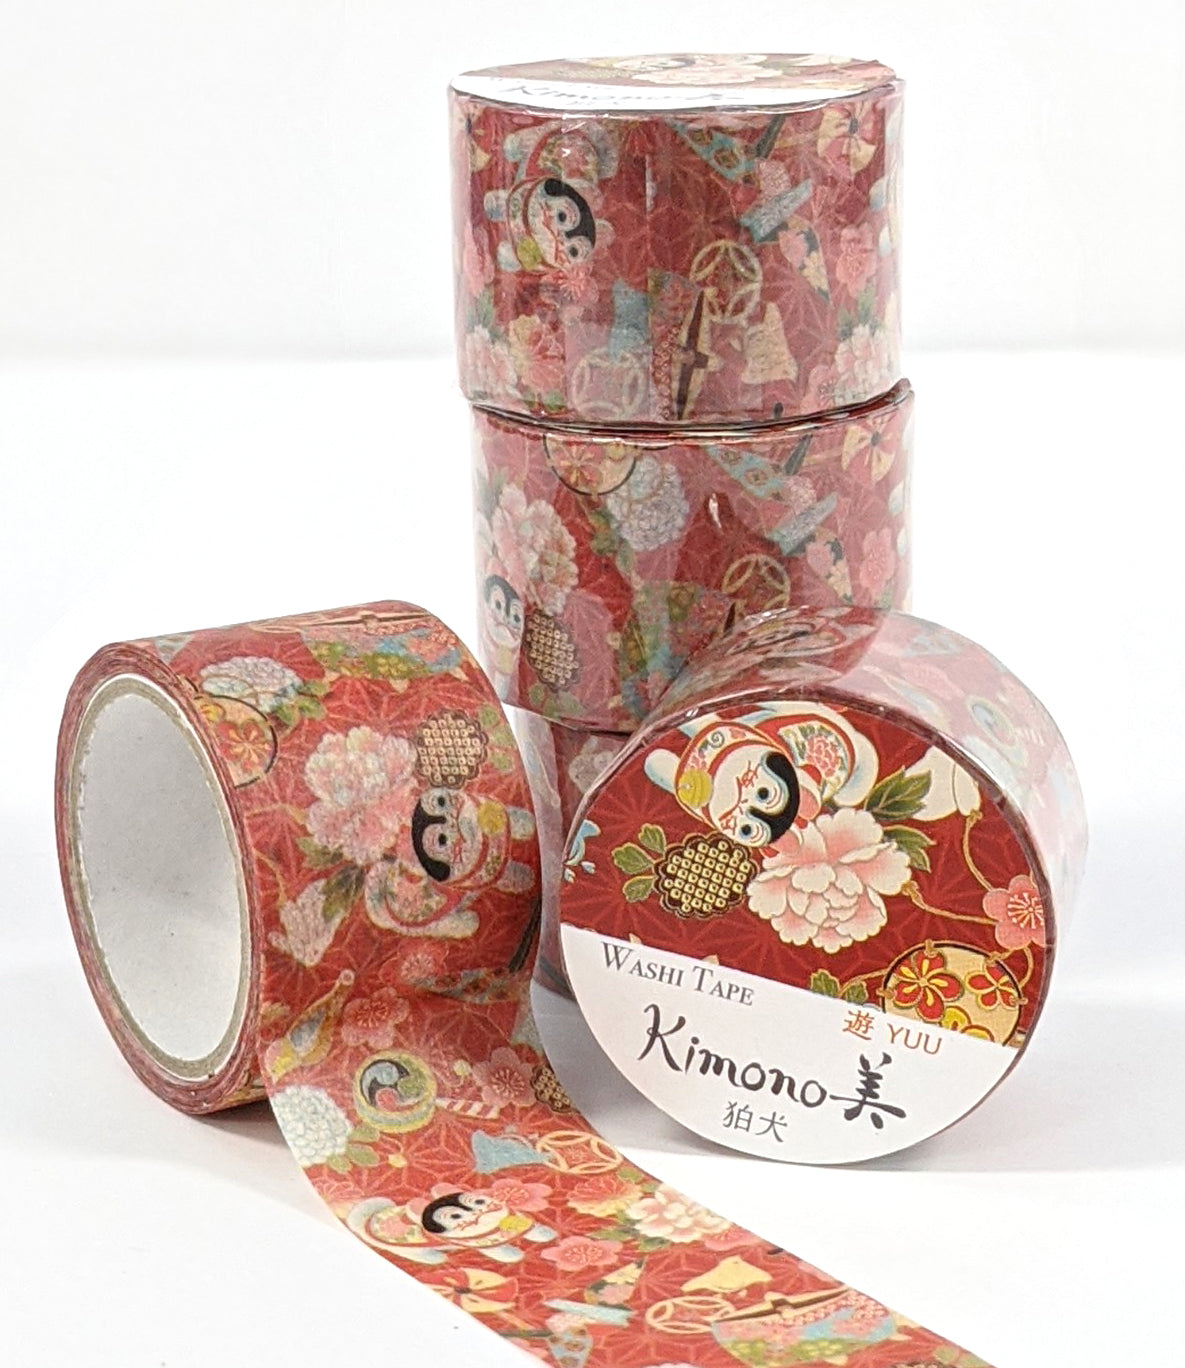 Kimono Yuu Guardian Dog 25mm Washi Tape